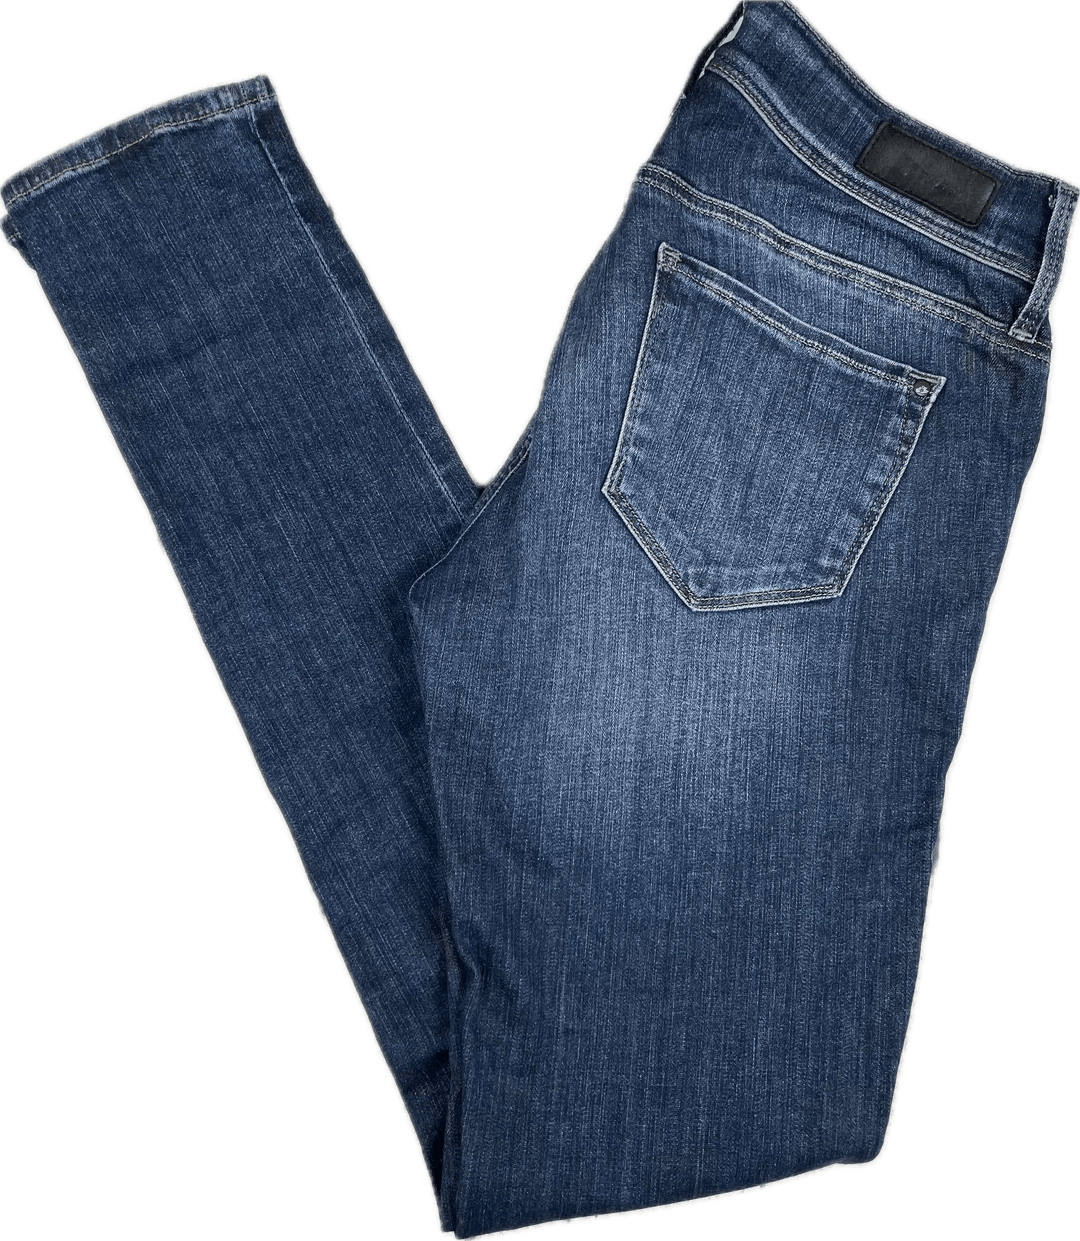 Mavi 'Reina' Ladies Maternity Stretch Skinny Jeans -Size 27/32 - Jean Pool